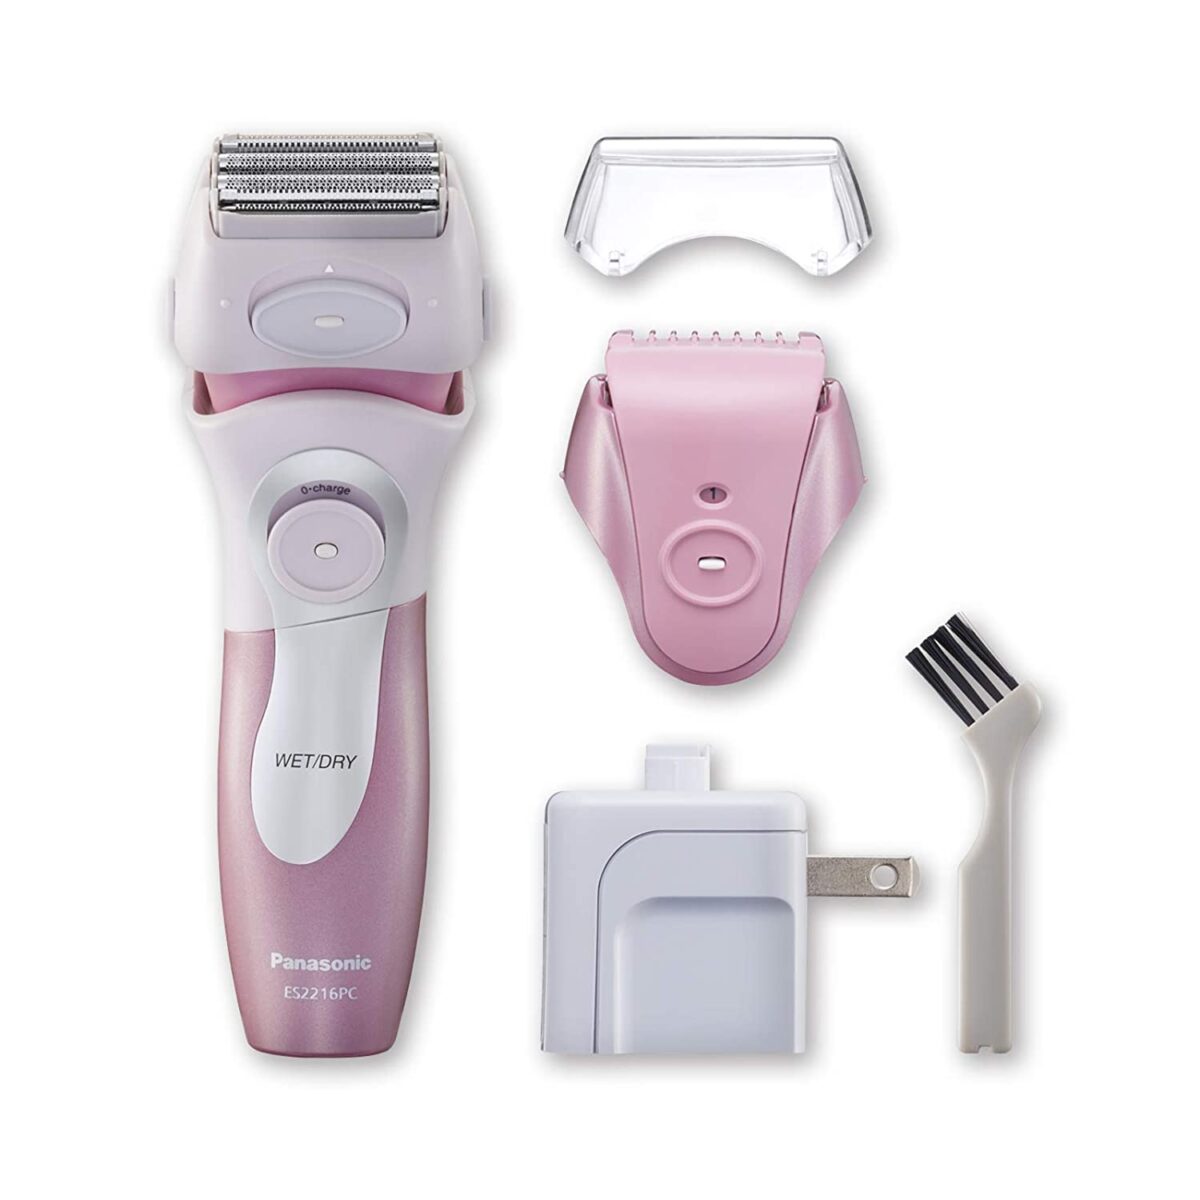 Panasonic Electric Shaver for Women, Cordless 4 Blade Razor, Close Curves, Bikini Attachment, Pop-Up Trimmer, Wet Dry Operation - ES2216PC